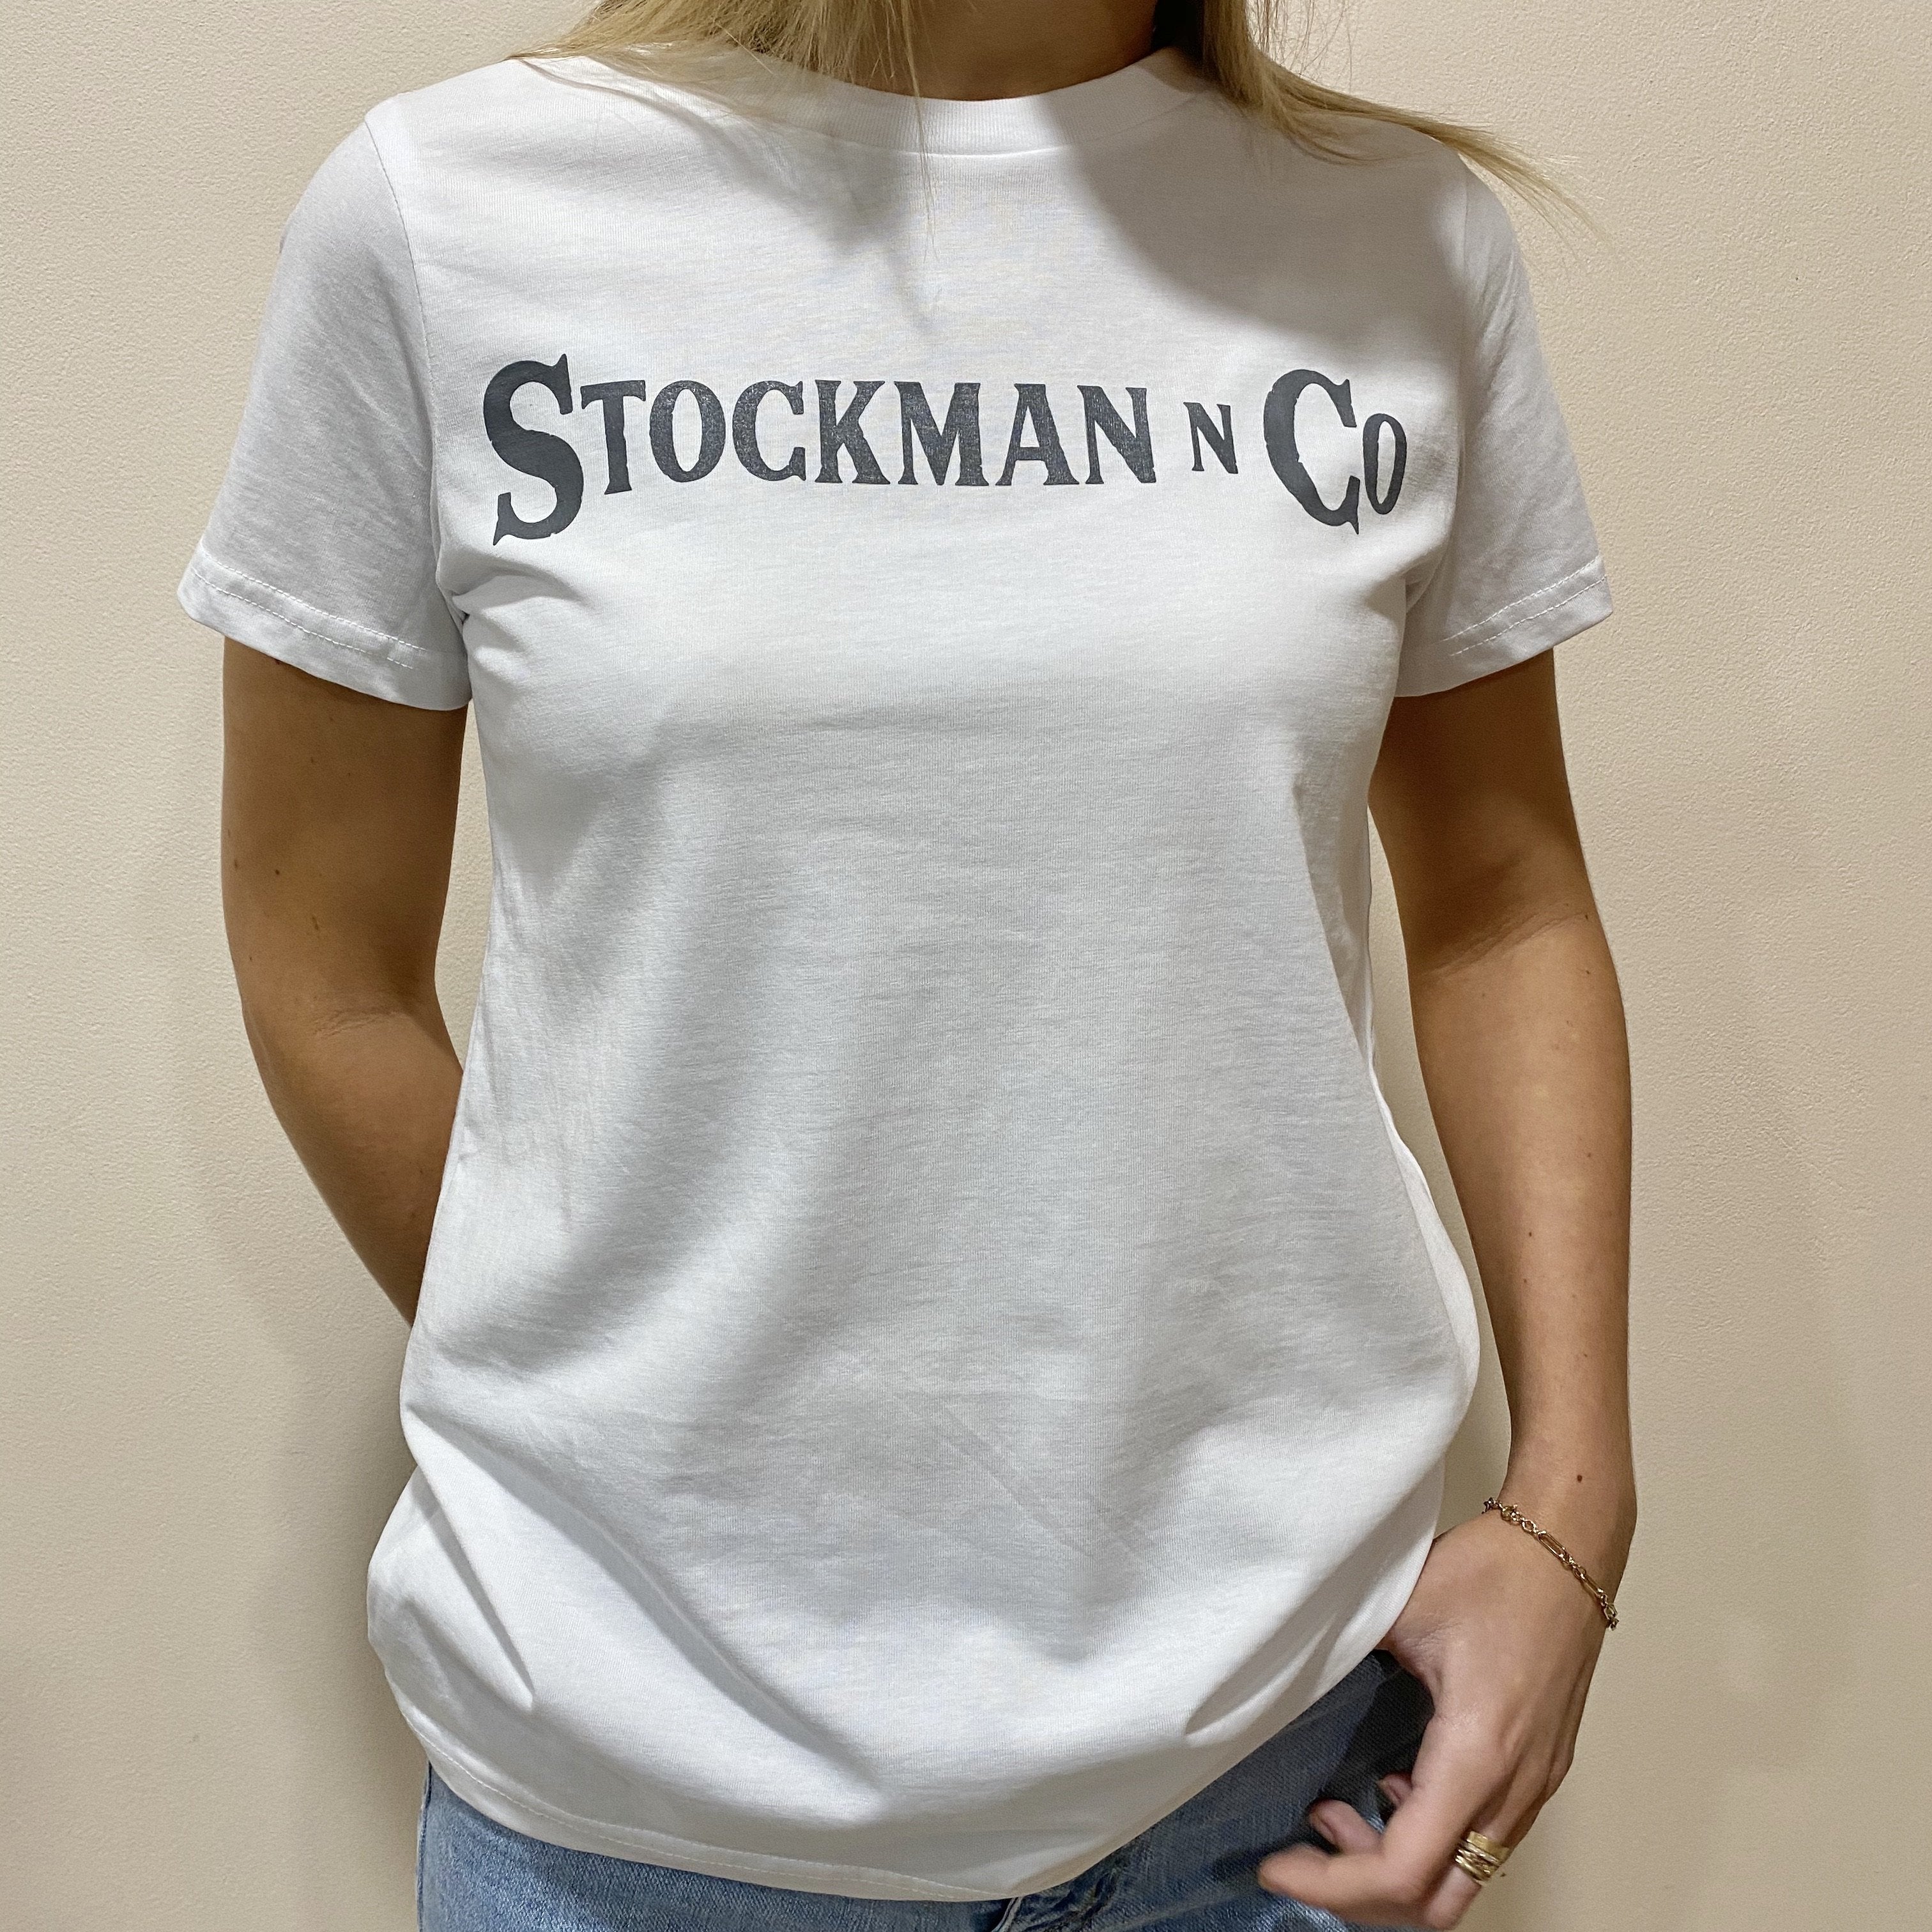 Women’s Stockman Basic Tee - STOCKMAN N CO